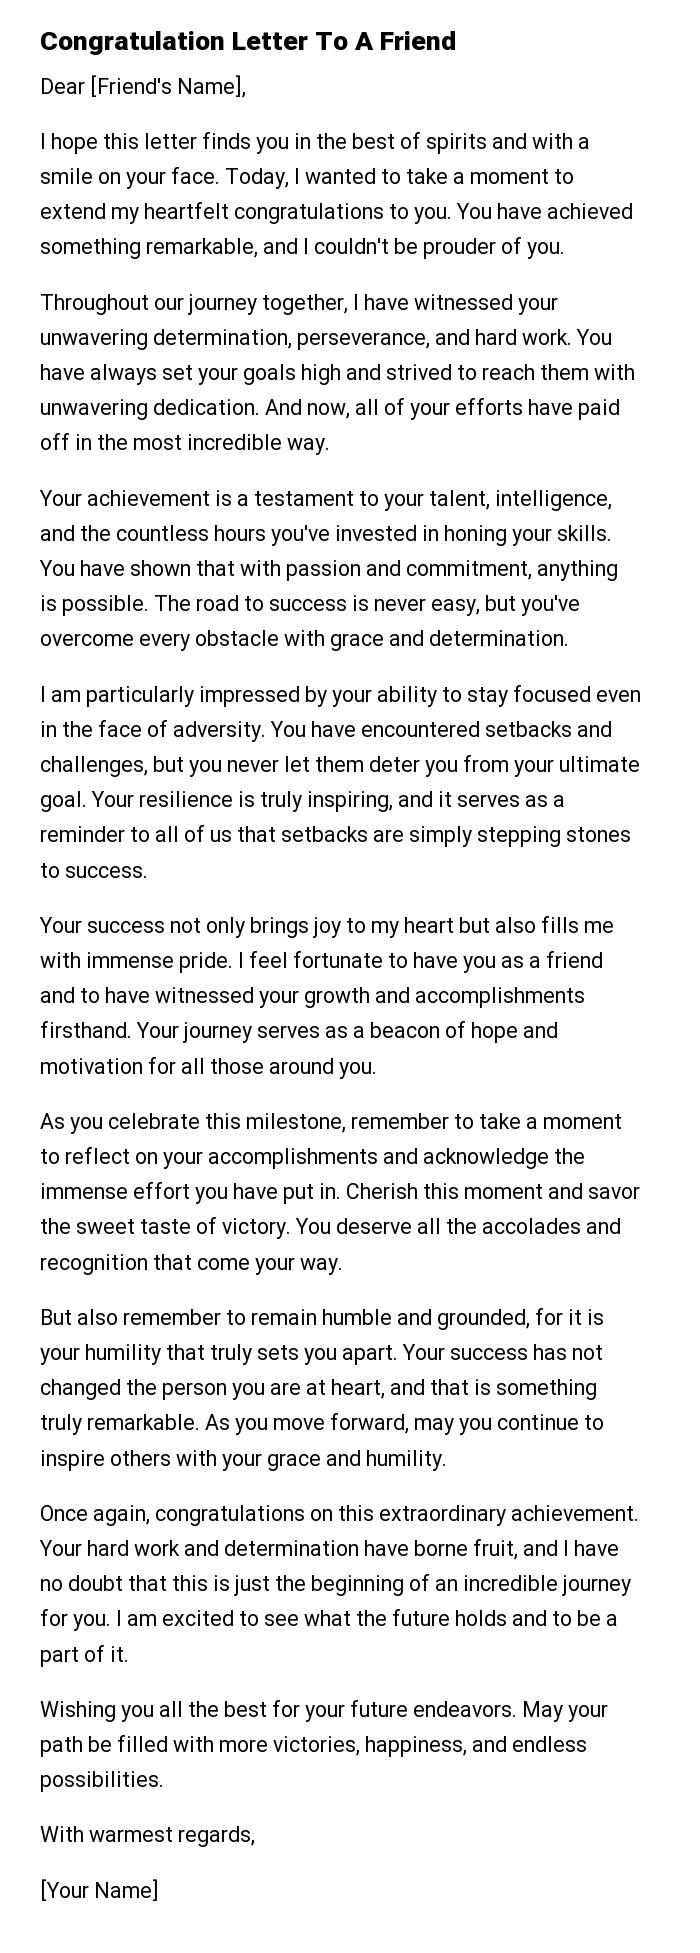 Congratulation Letter To A Friend